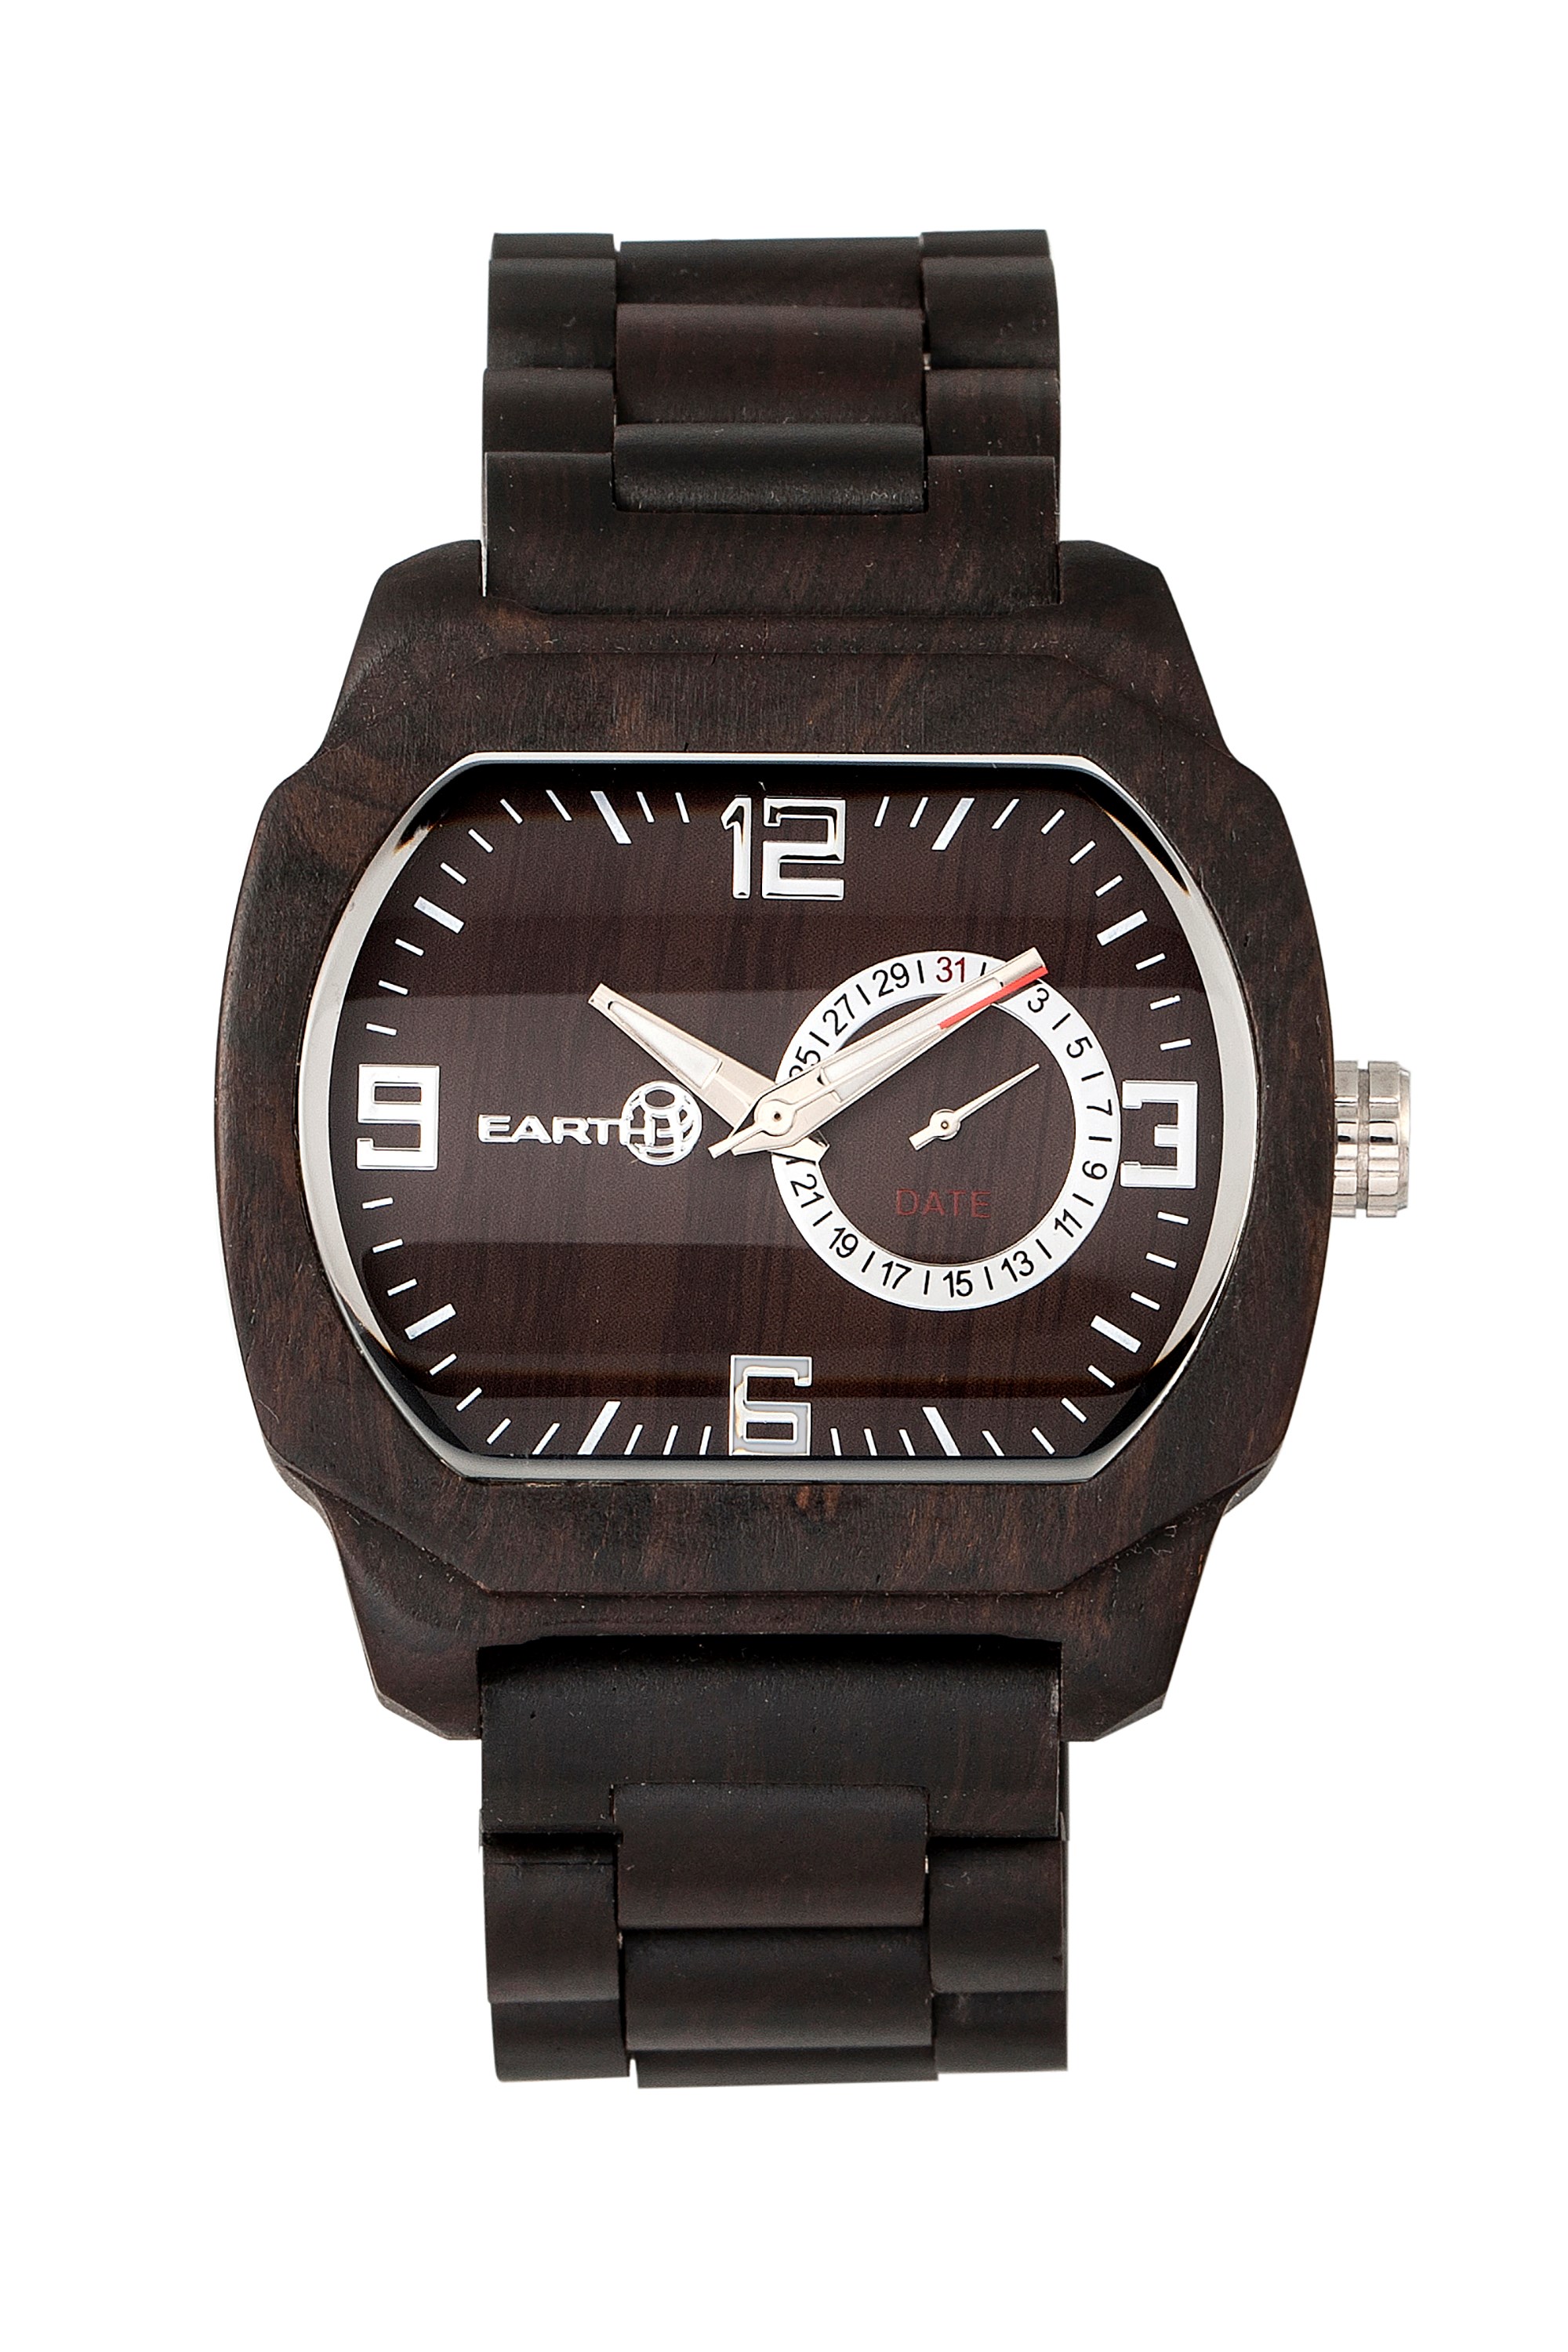 Scaly Bracelet Watch With Date -